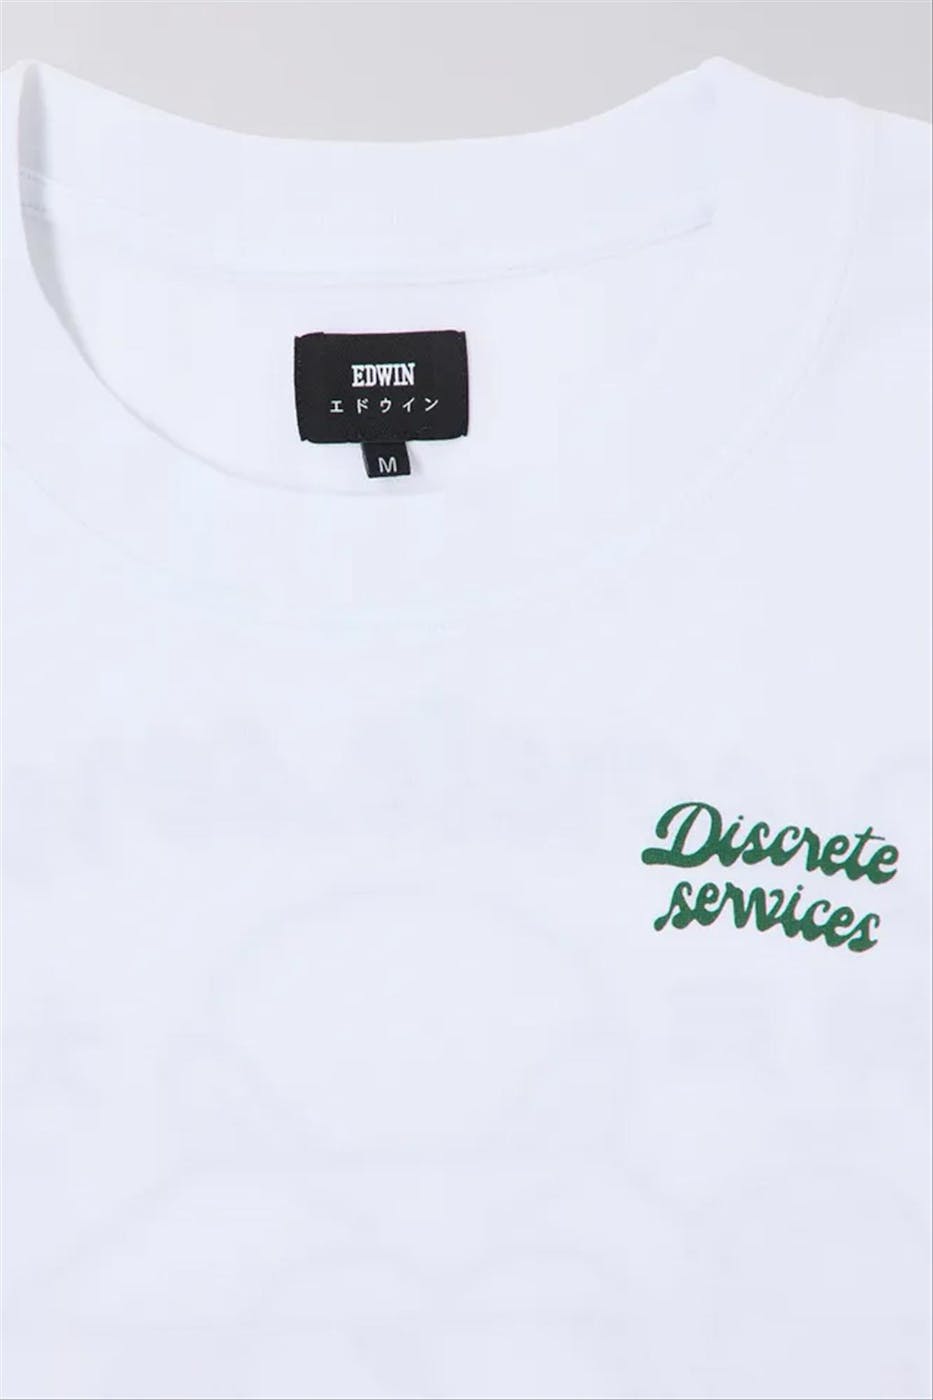 Edwin - Witte Discrete Services T-shirt